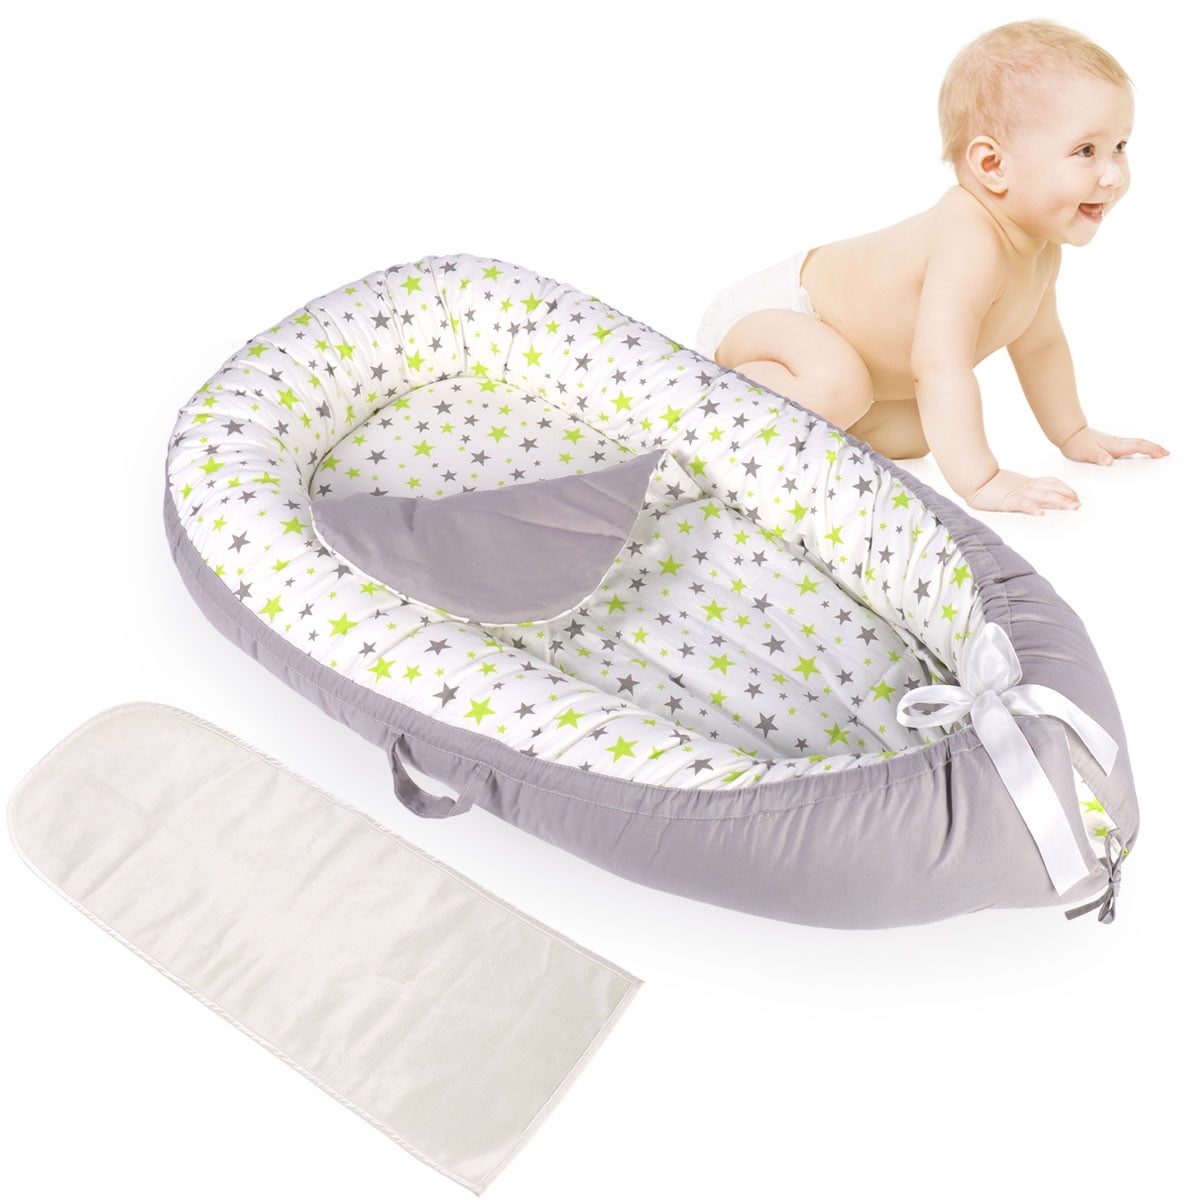 New born Baby Pod Nest mat Reversible Cocoon Bed Sleep Newborn Cushion Gift UK 